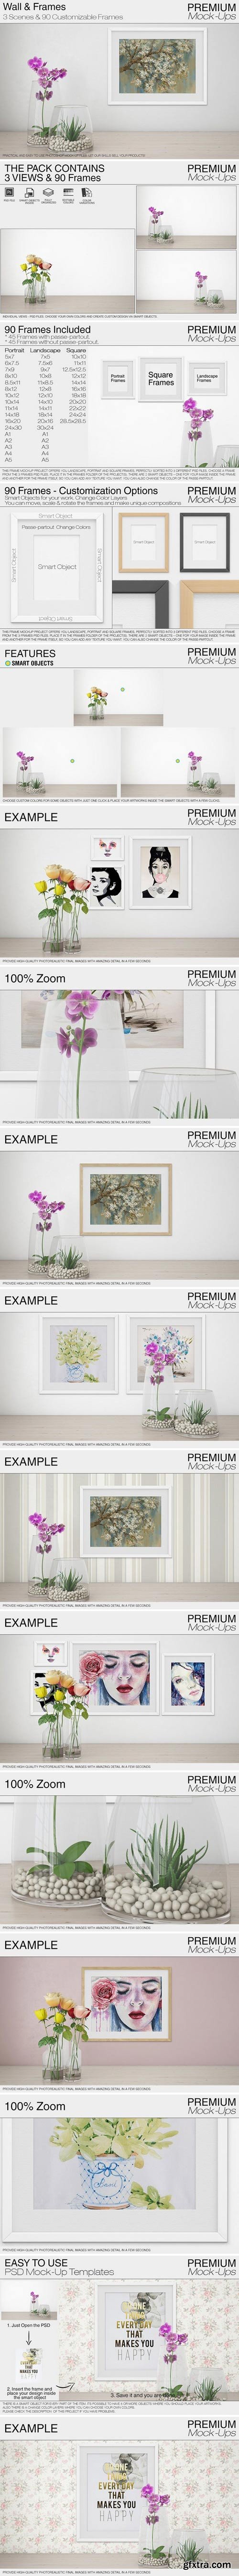 CM - Wall & Frames Mockup - Orchid 2213306